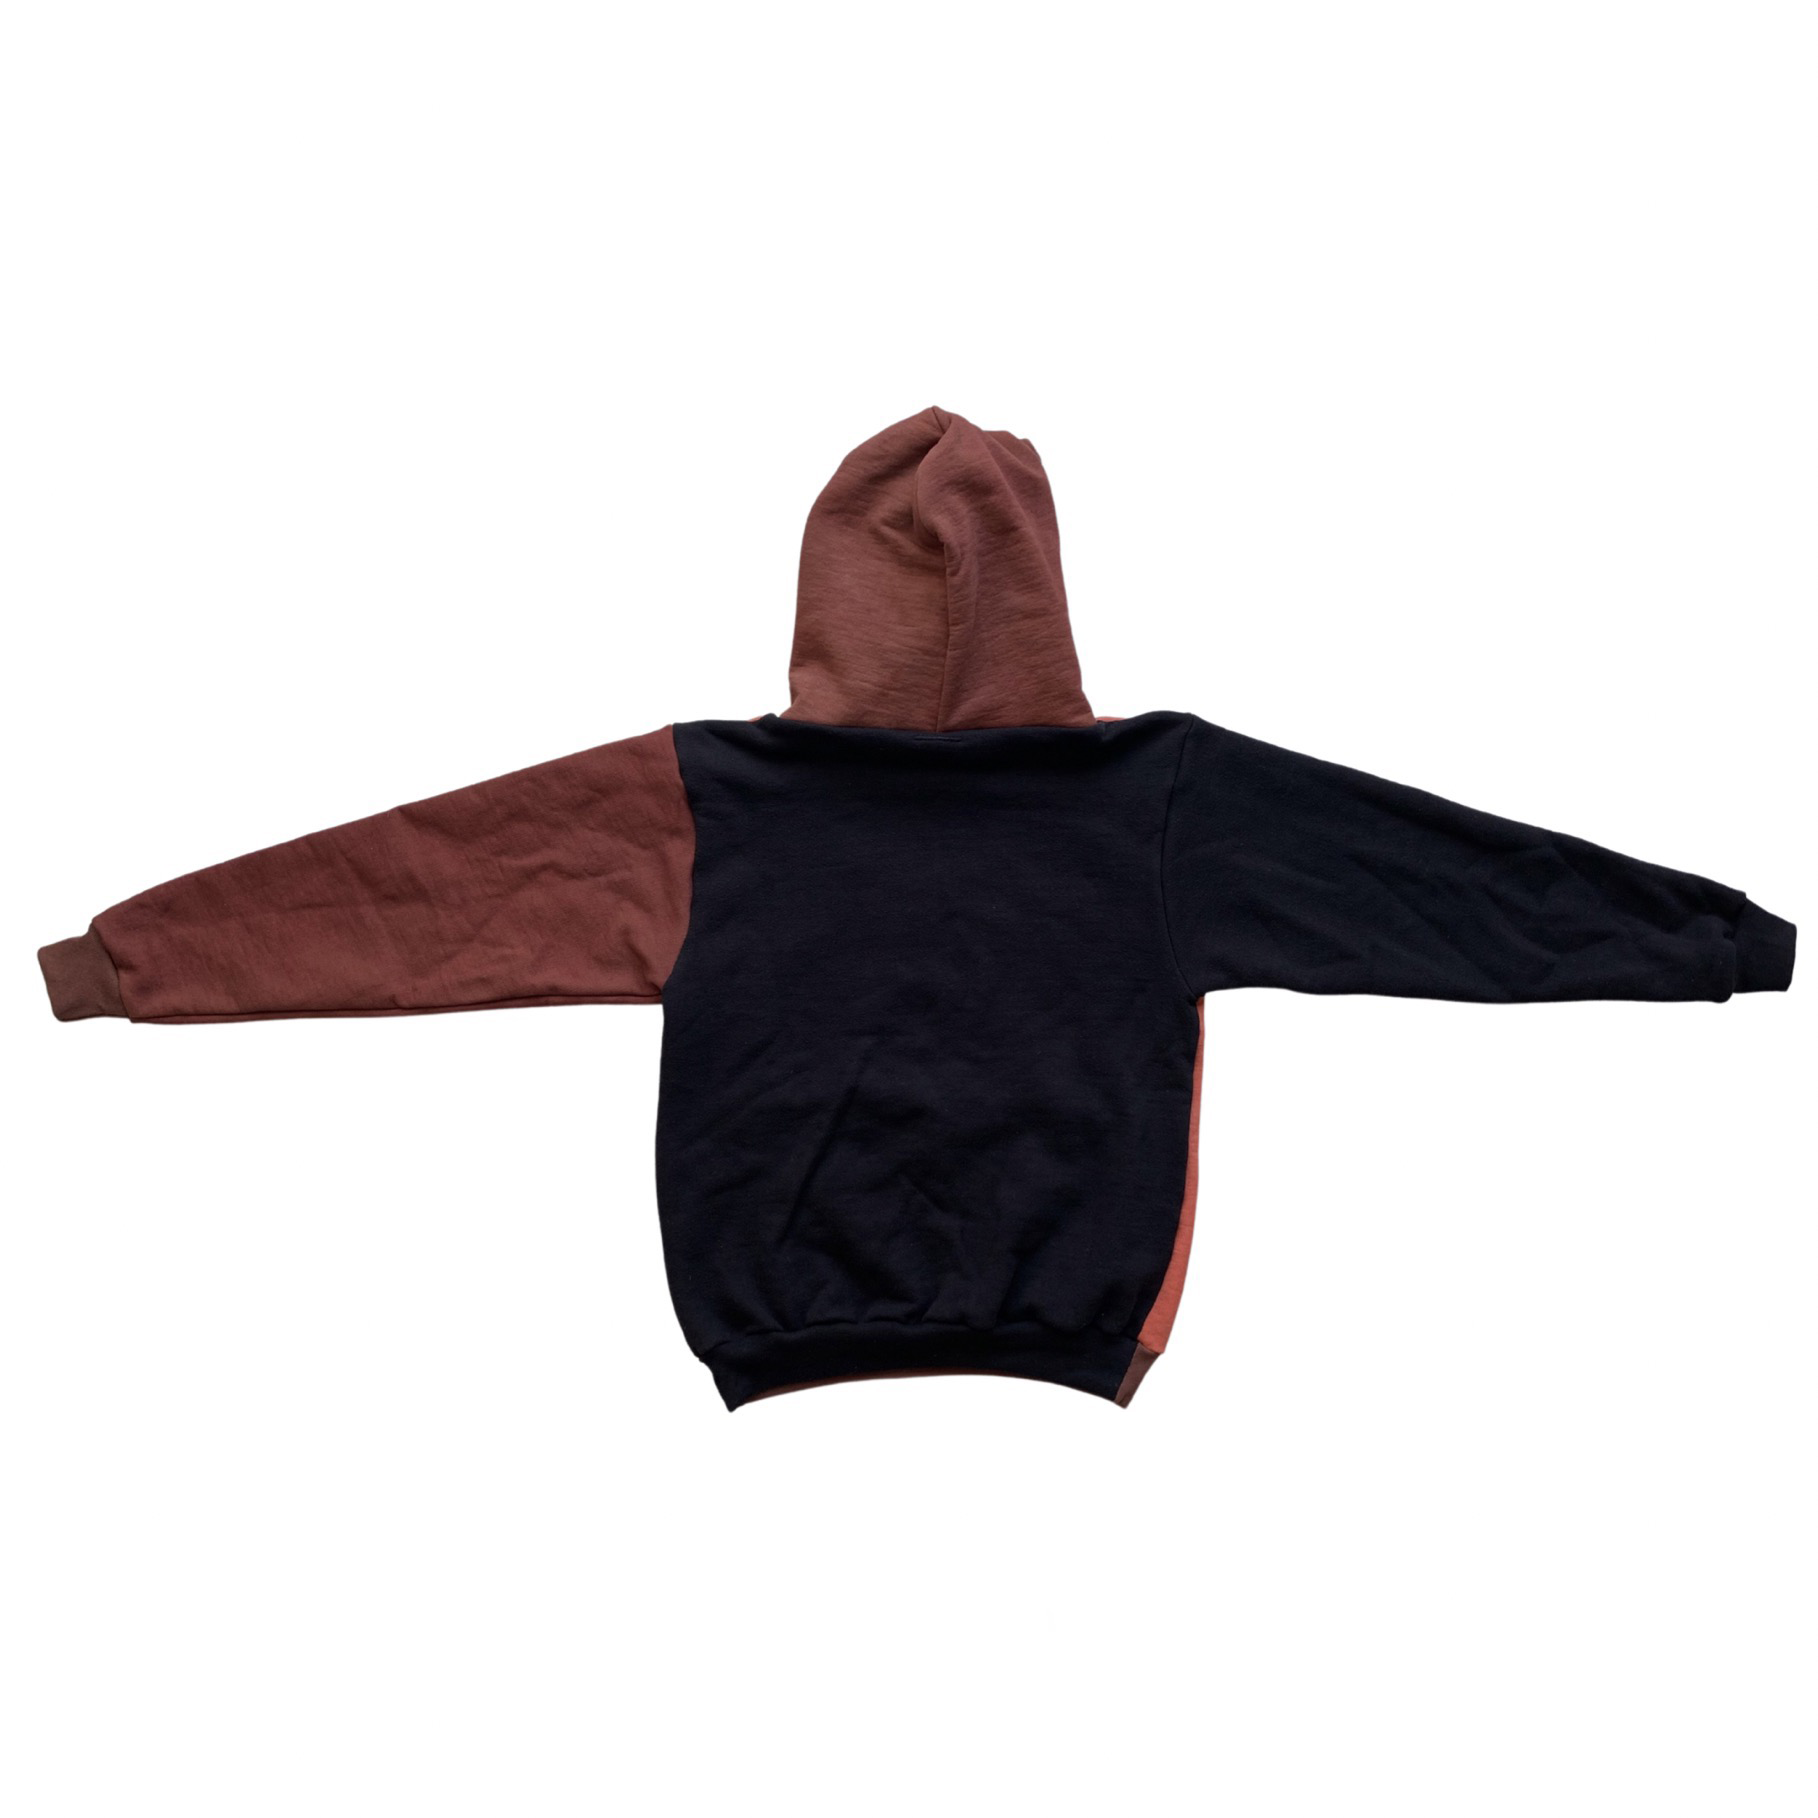 heavy fleece hoodie- organic usa cotton - embroidered - S